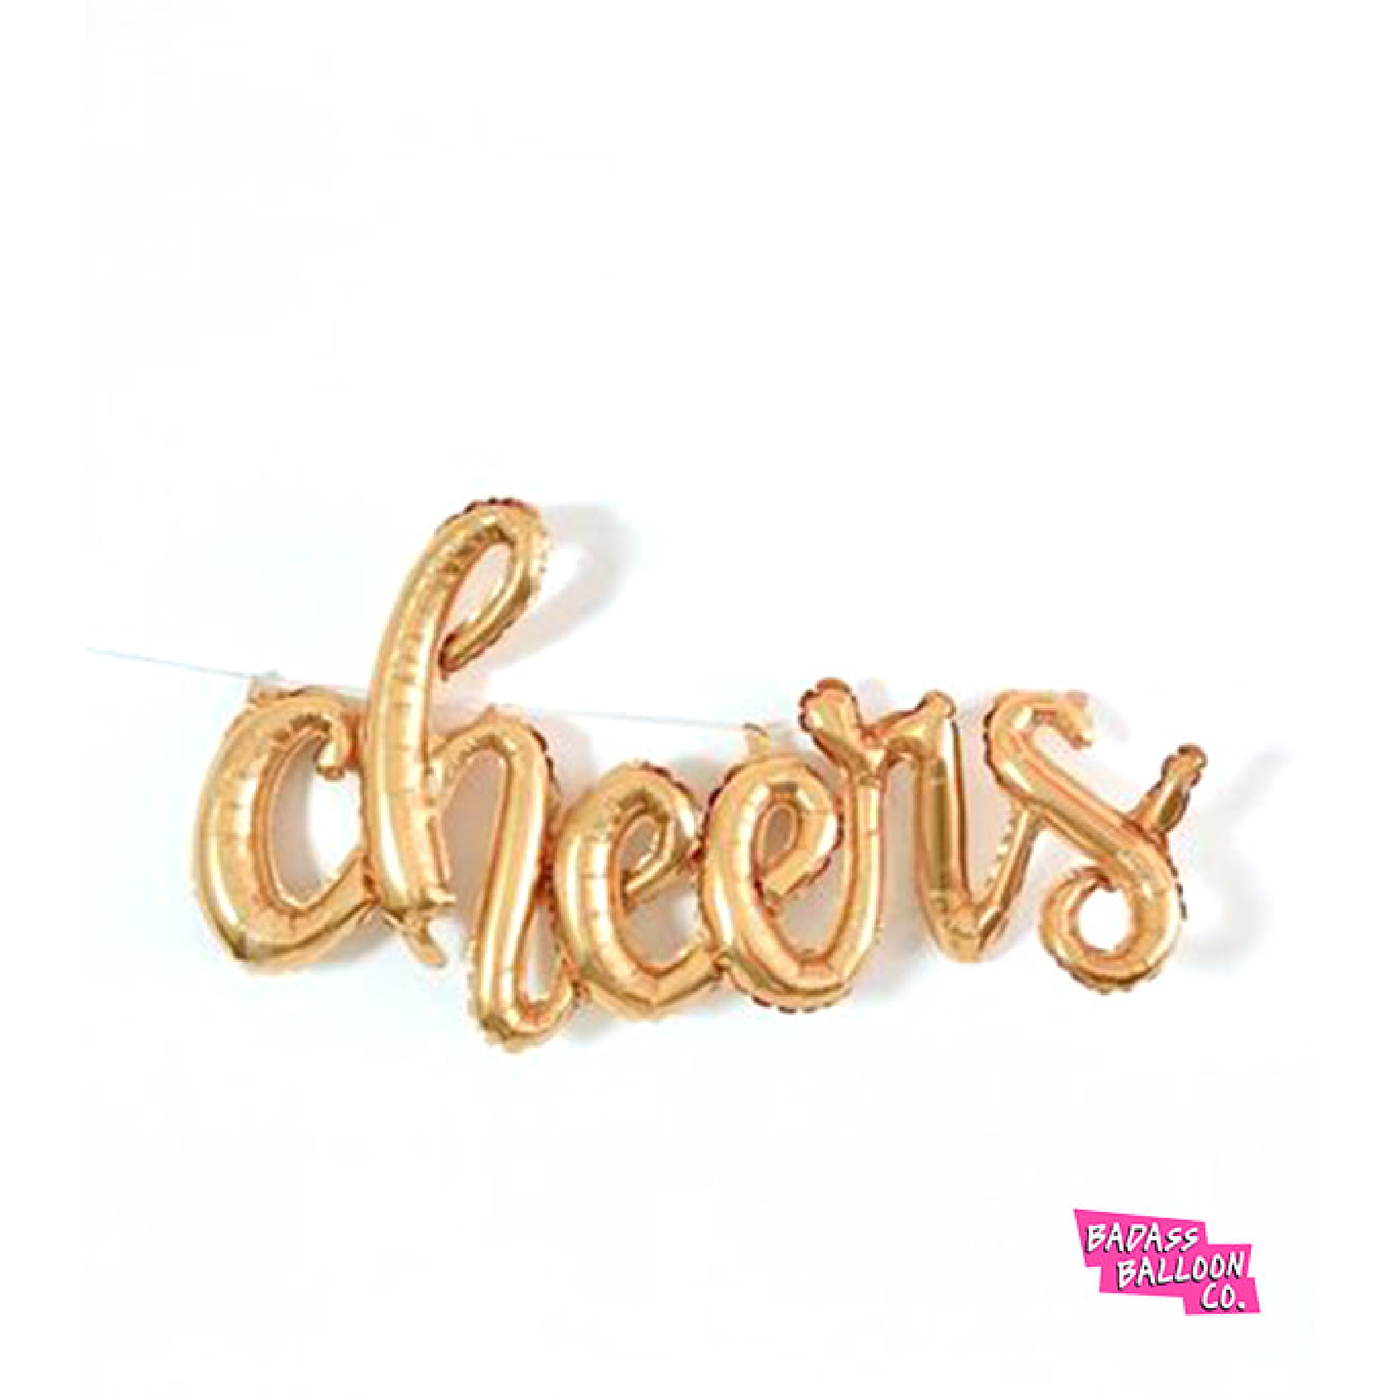 Gold "CHEERS" Script Balloon - badassballoonco